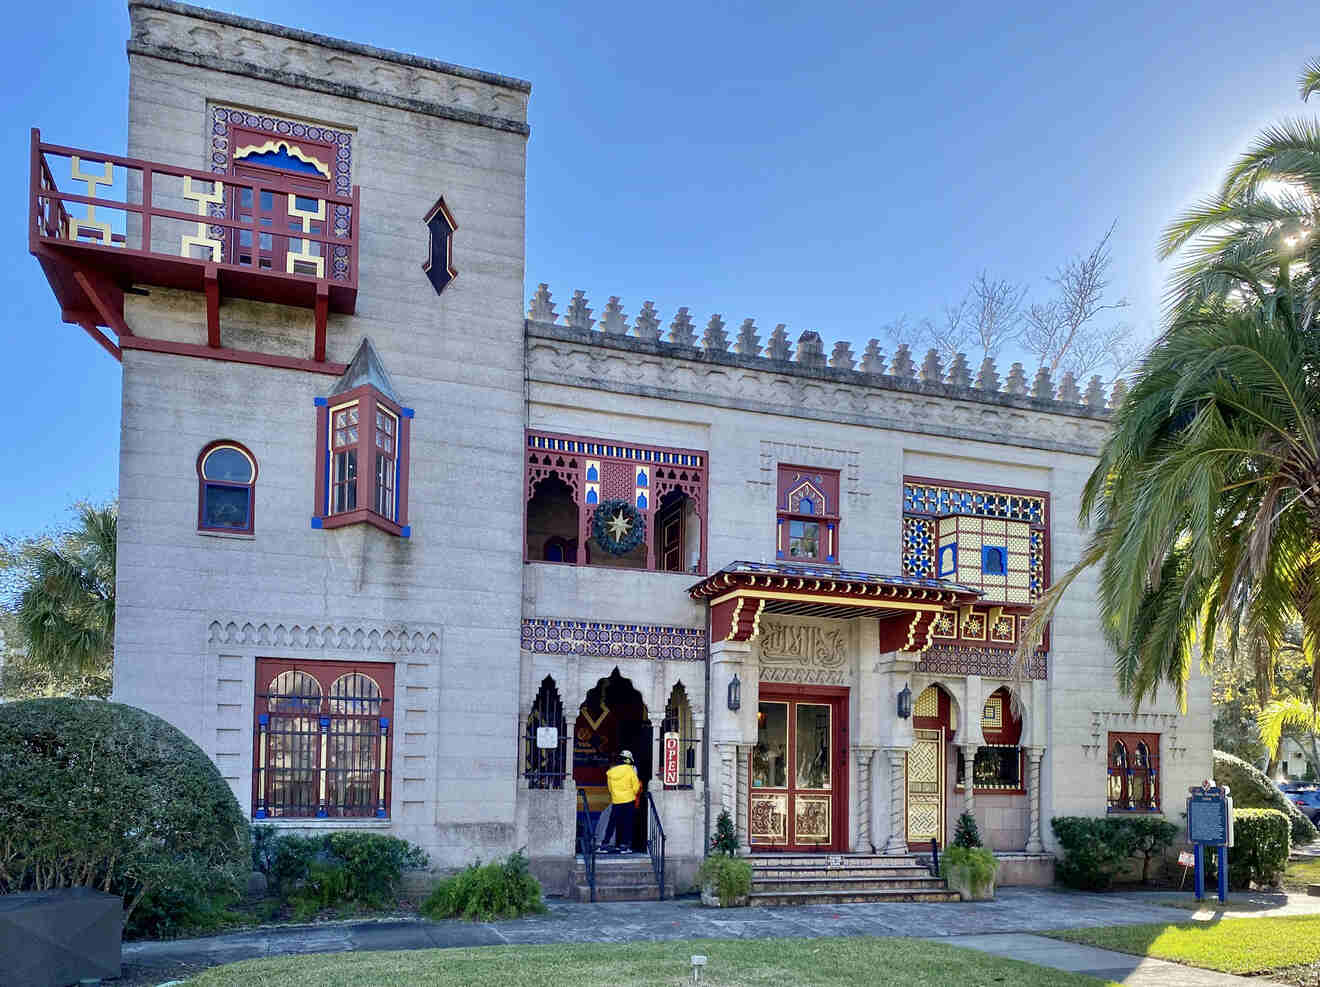 The exterior of Villa Zorayda Museum